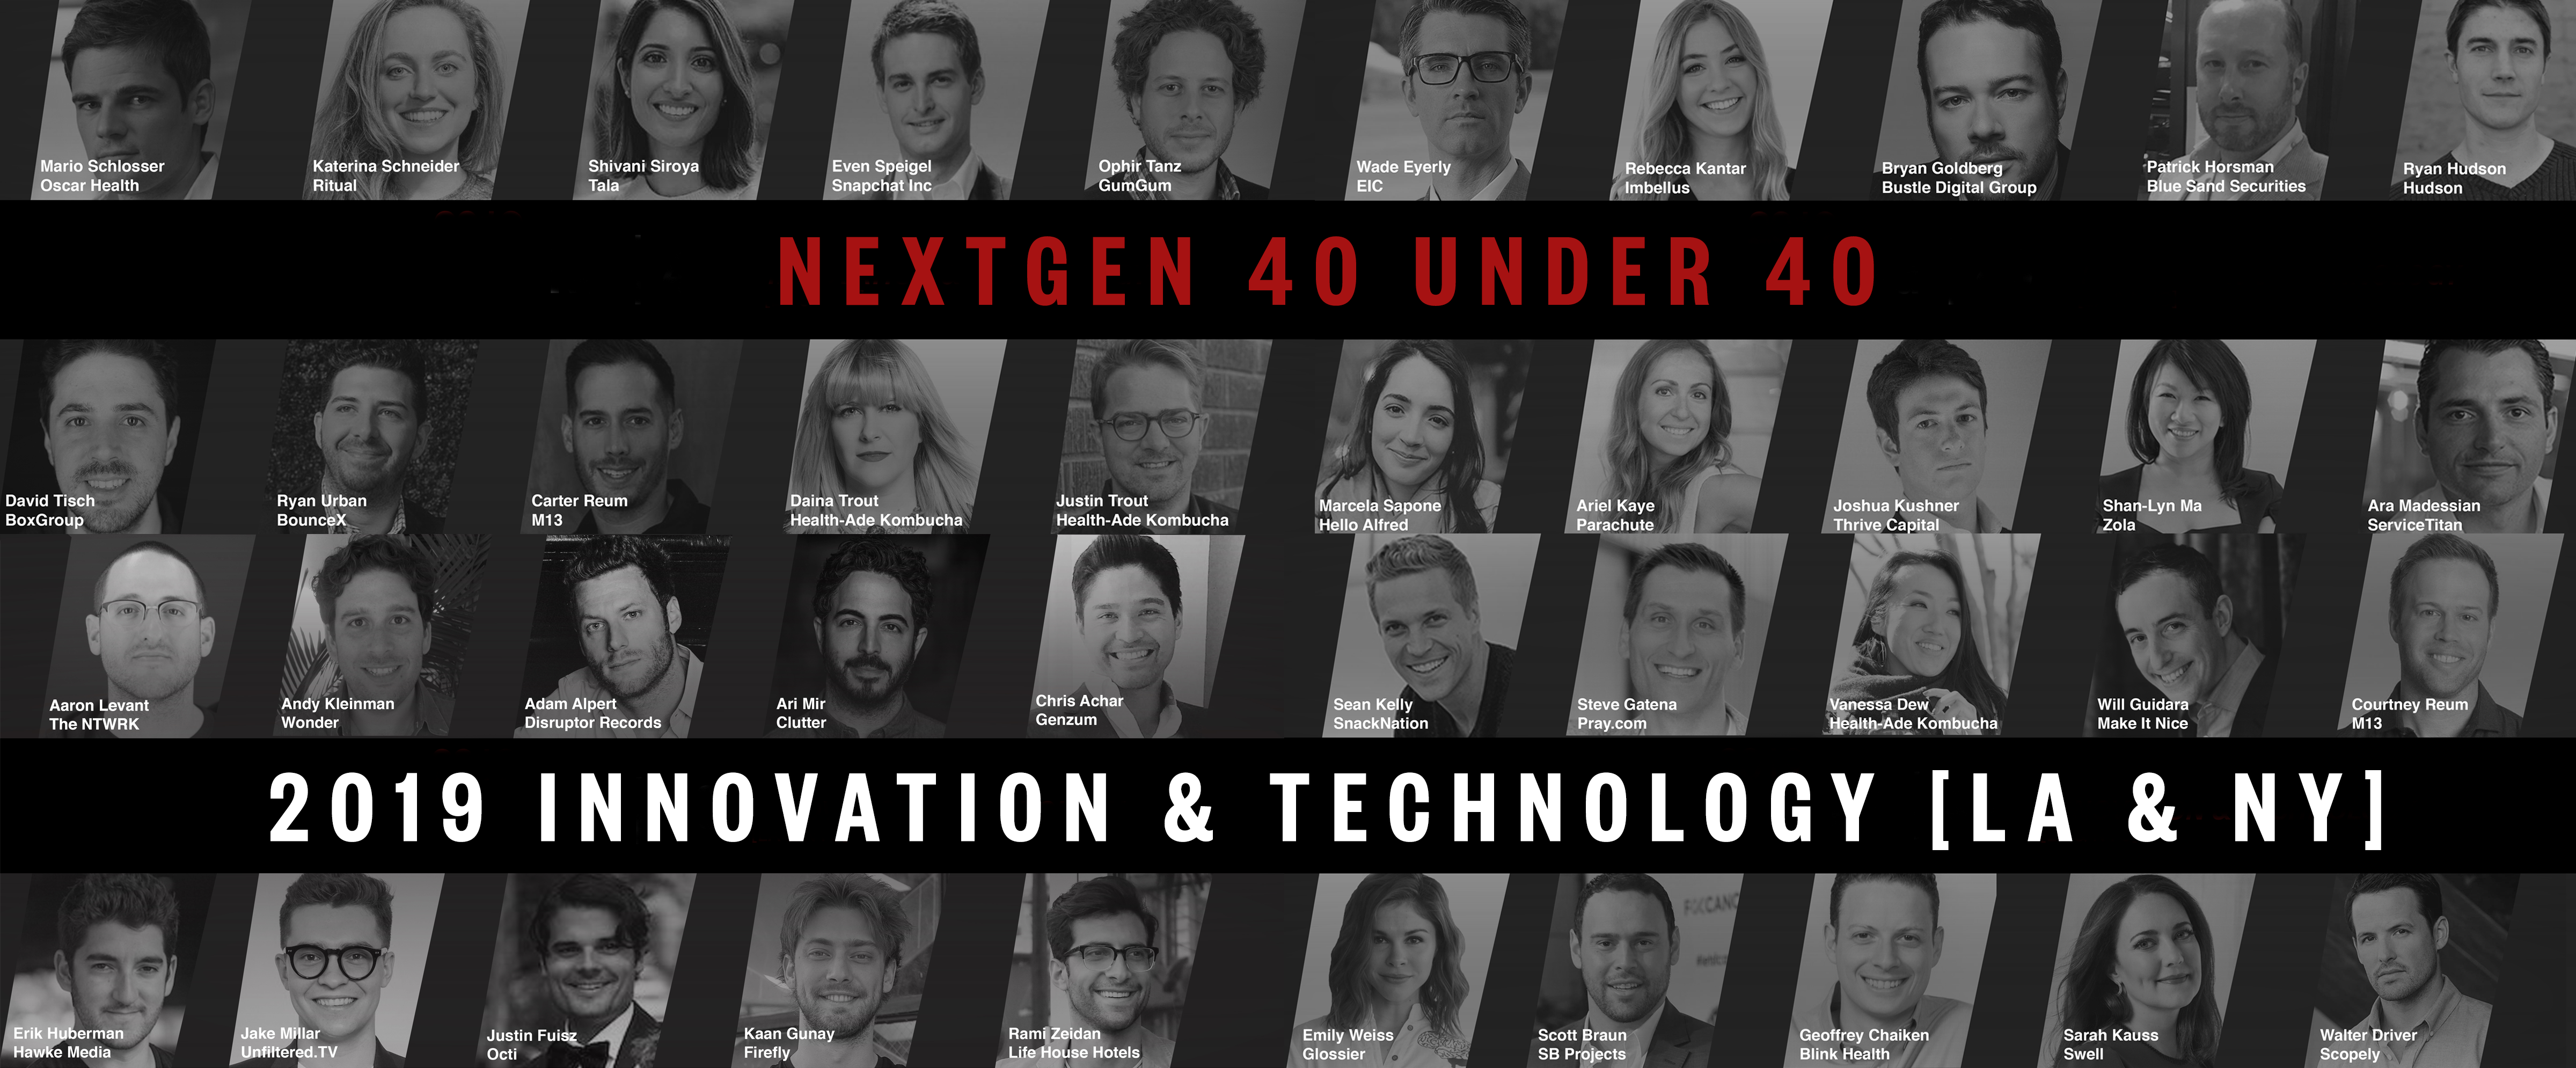 NextGen 40 Under 40: Innovation & Technology [2019]